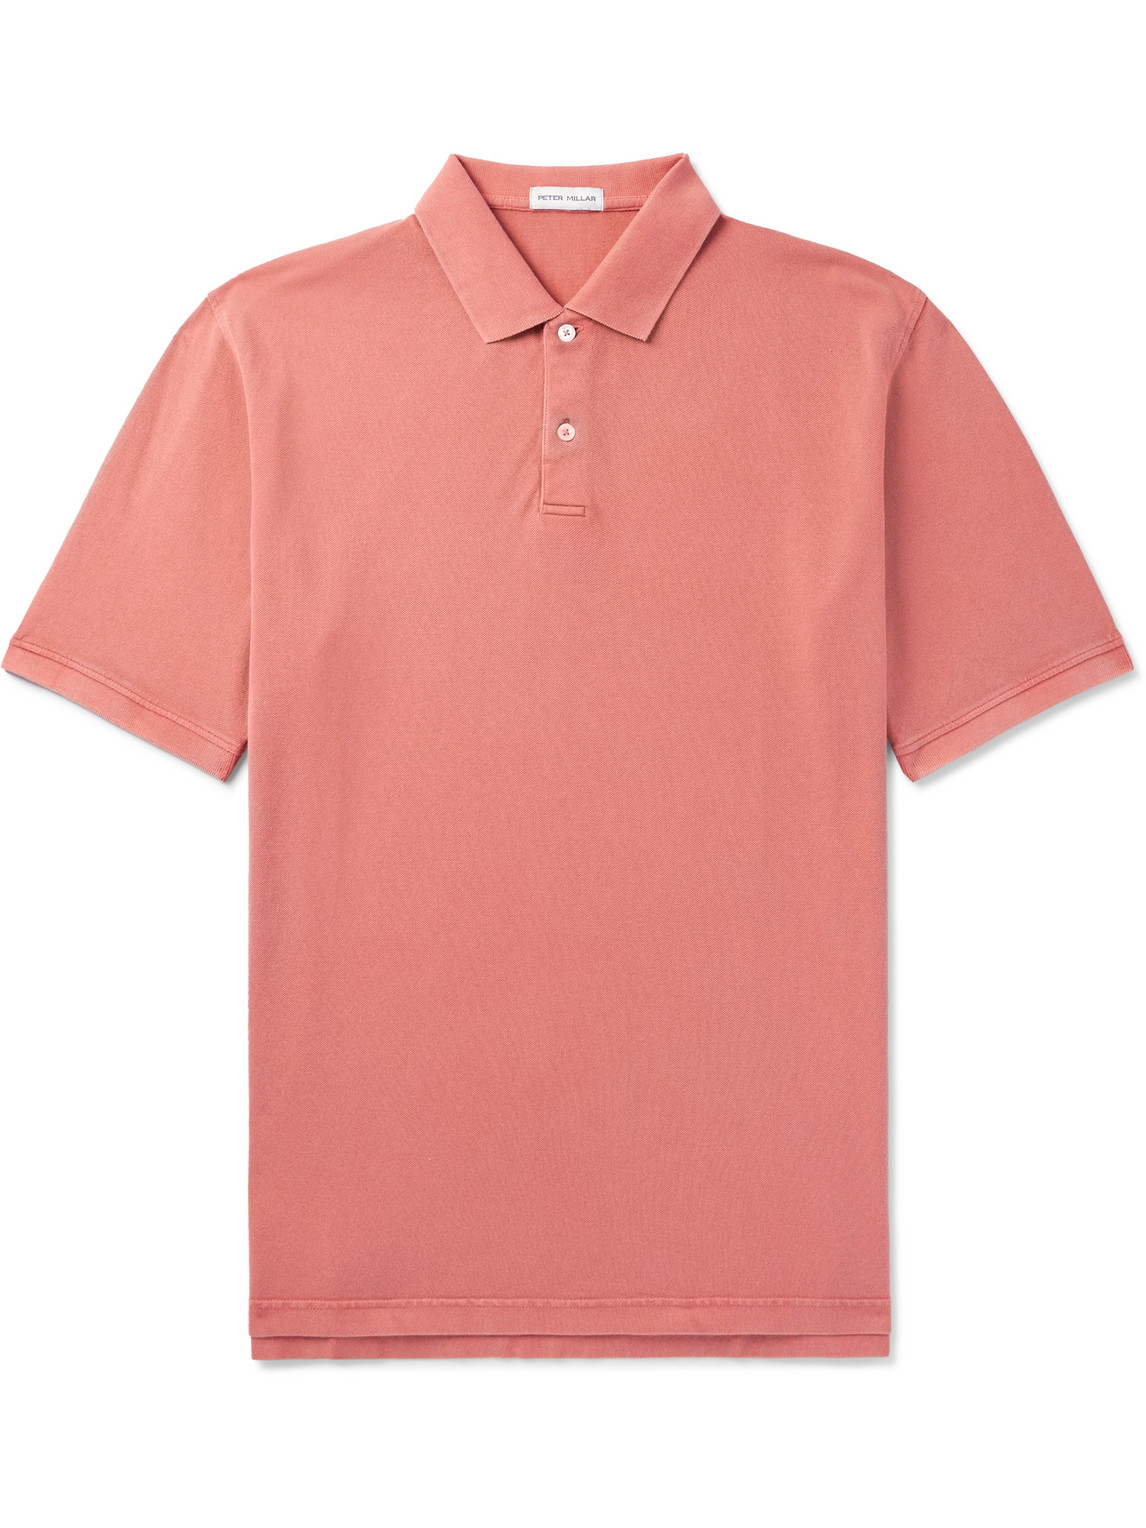 Peter Millar - Sunrise Garment-Dyed Cotton-Piqué Polo Shirt - Men - Red - M von Peter Millar